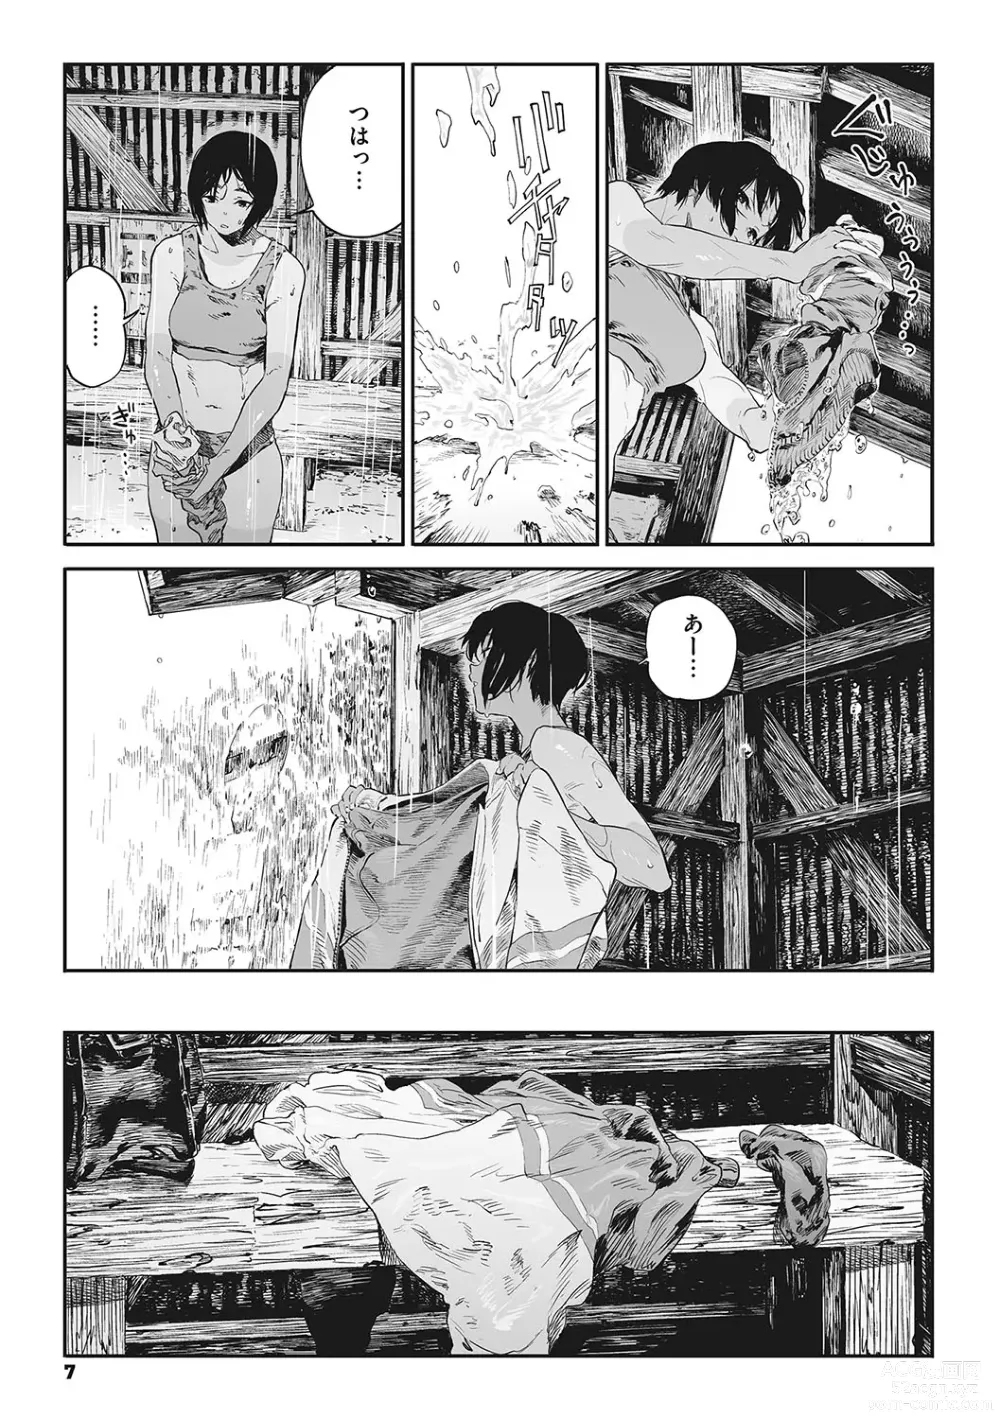 Page 6 of manga Ito o Yoru